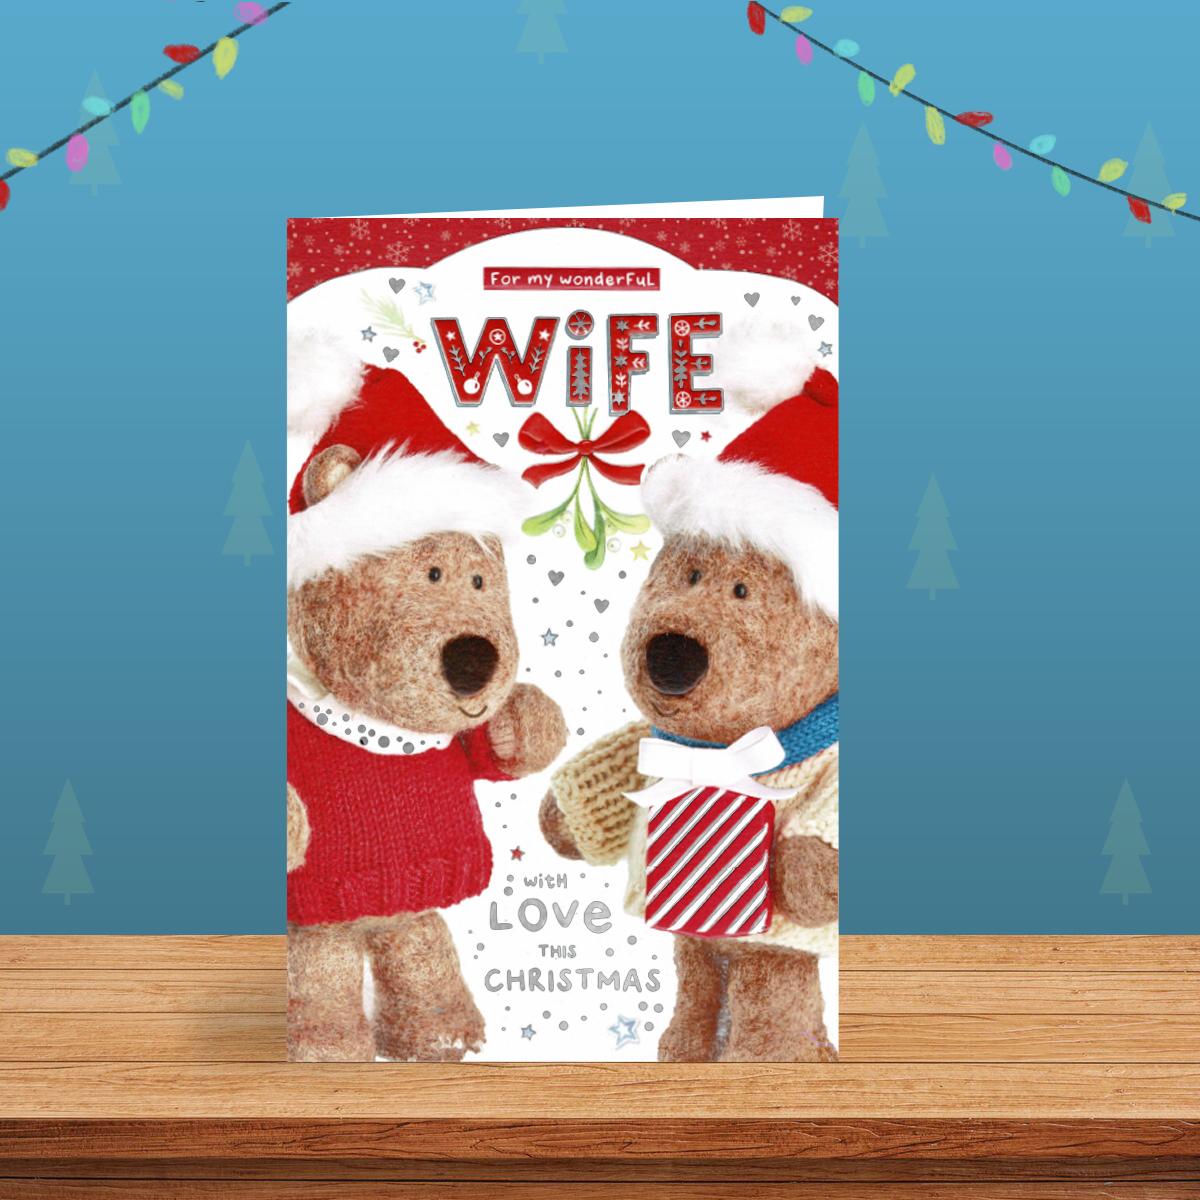 Barley Bear Wife Christmas Card Alongside Its Red Envelope